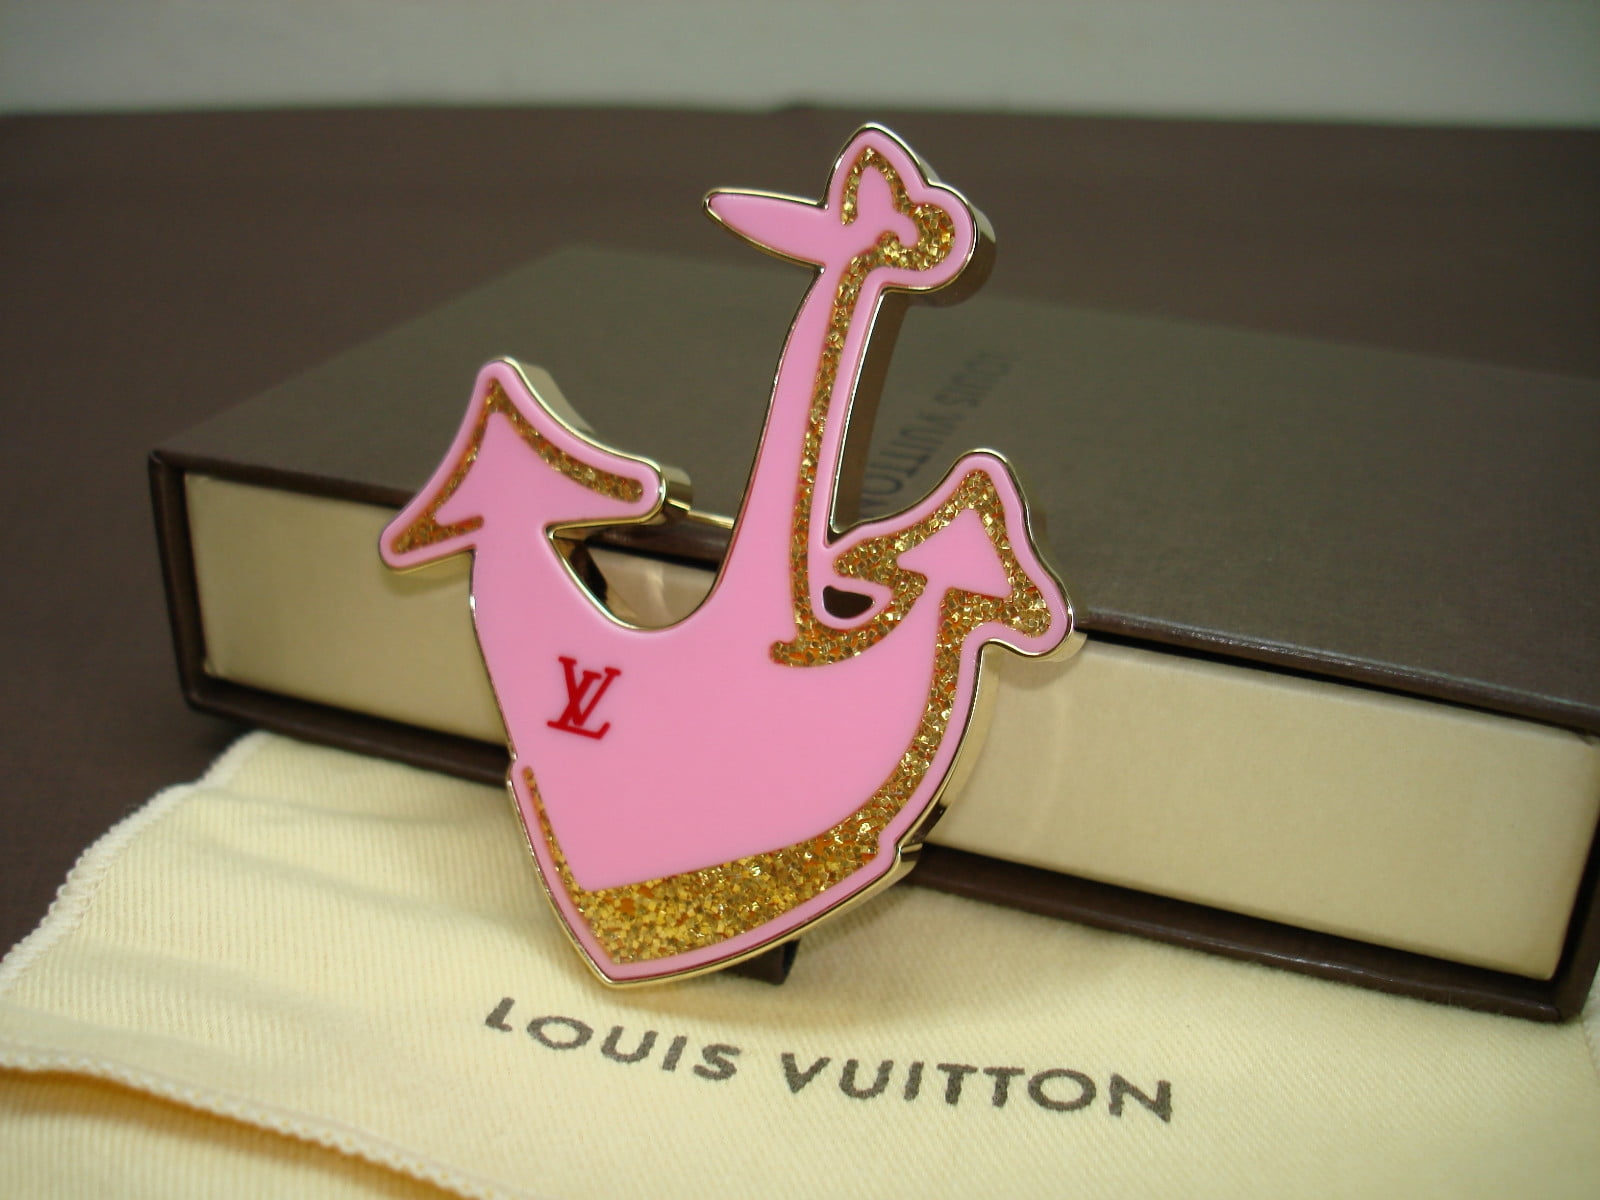 pink and gold Louis Vuitton emblem